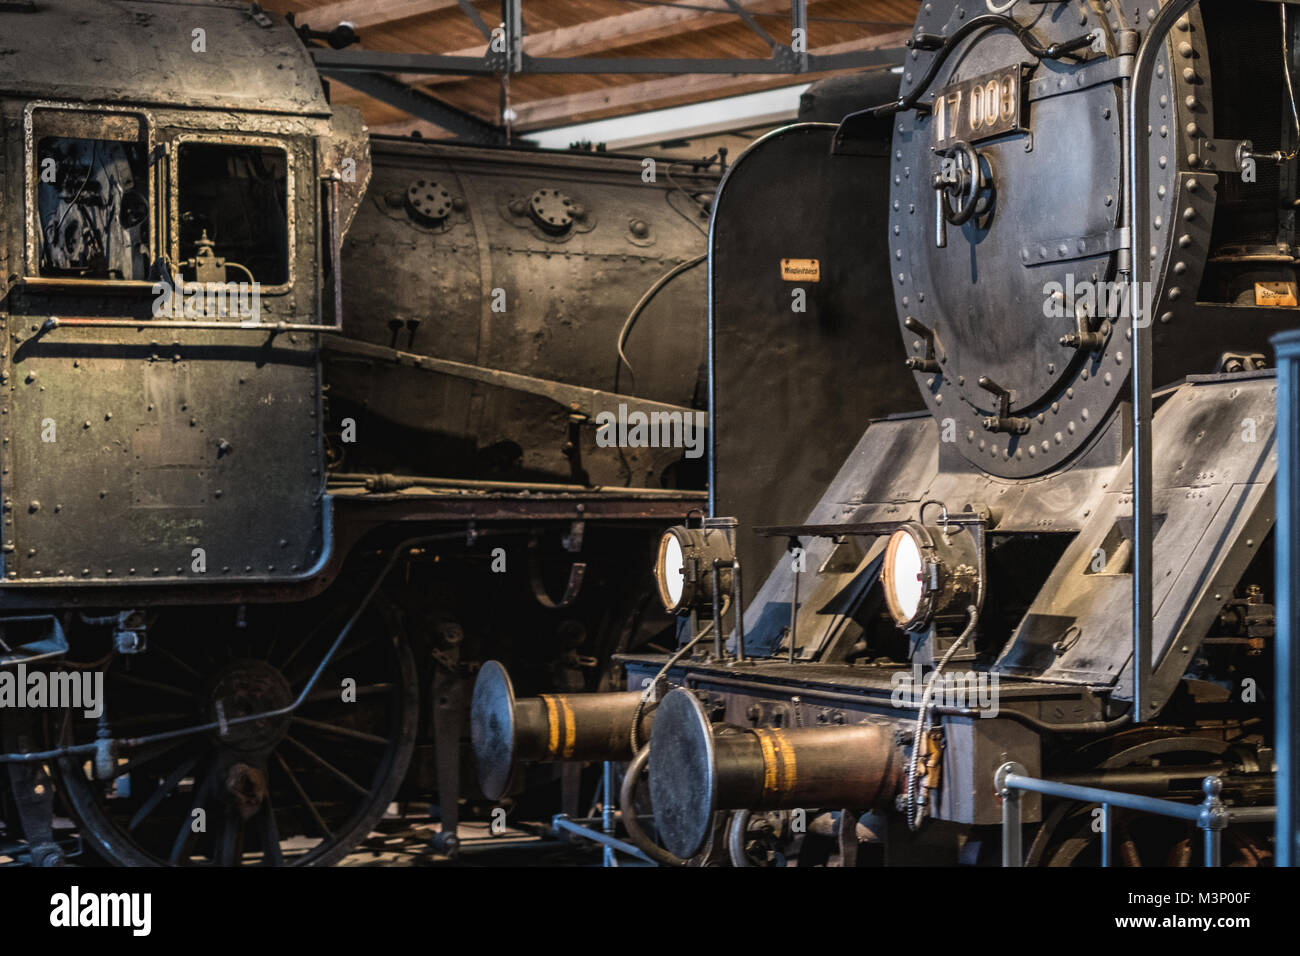 Berlin, Deutschland - Februar, 2018: alte Dampflokomotiven auf Deutschen Technik Museum (Deutsche Technikmuseum Berlin (DTMB)) Stockfoto